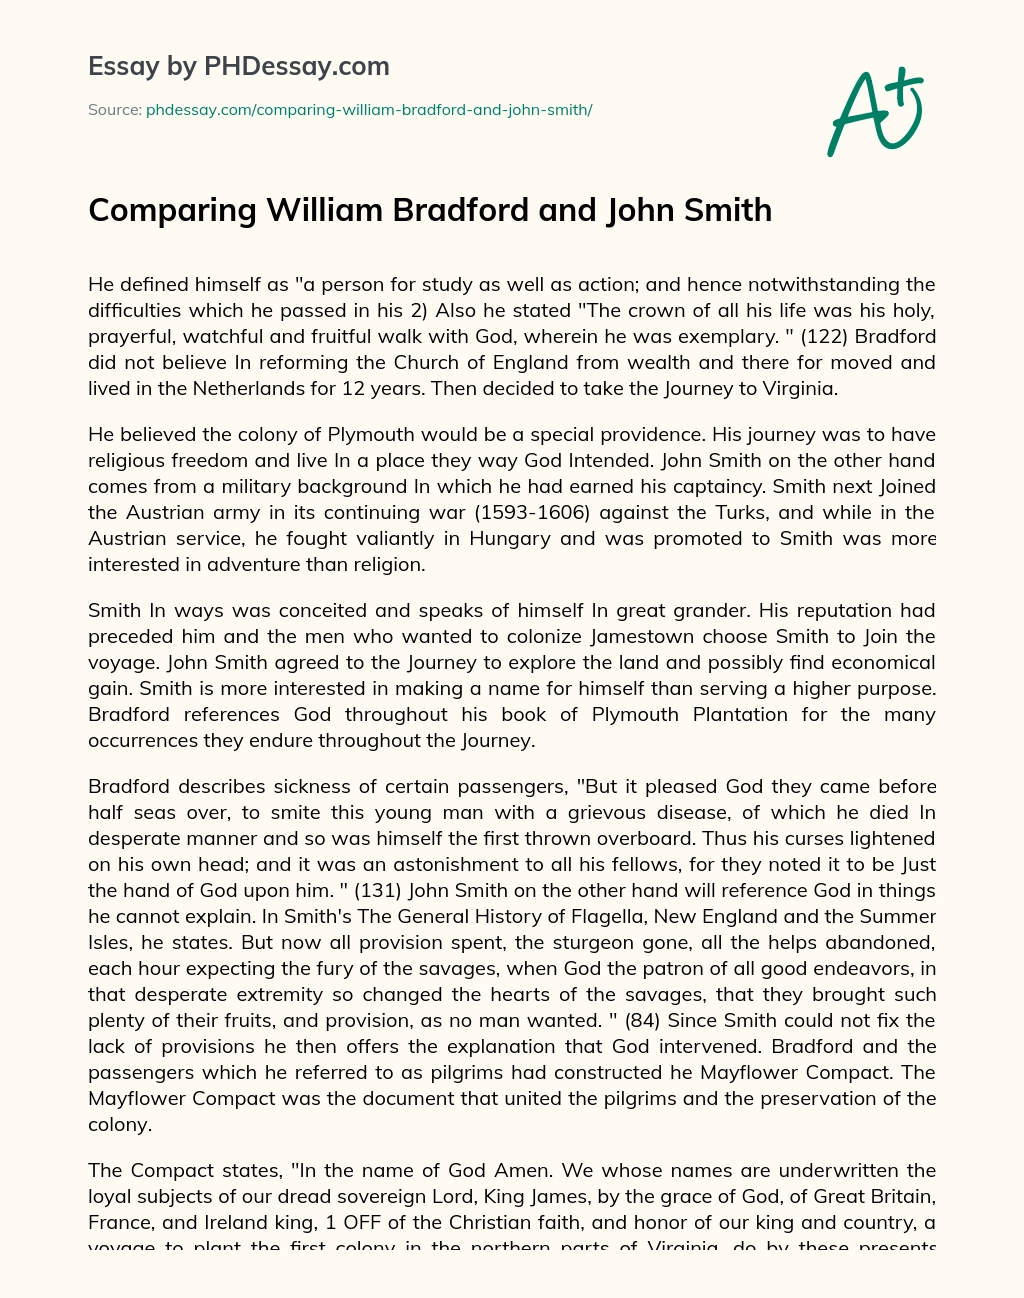 Comparing William Bradford and John Smith essay